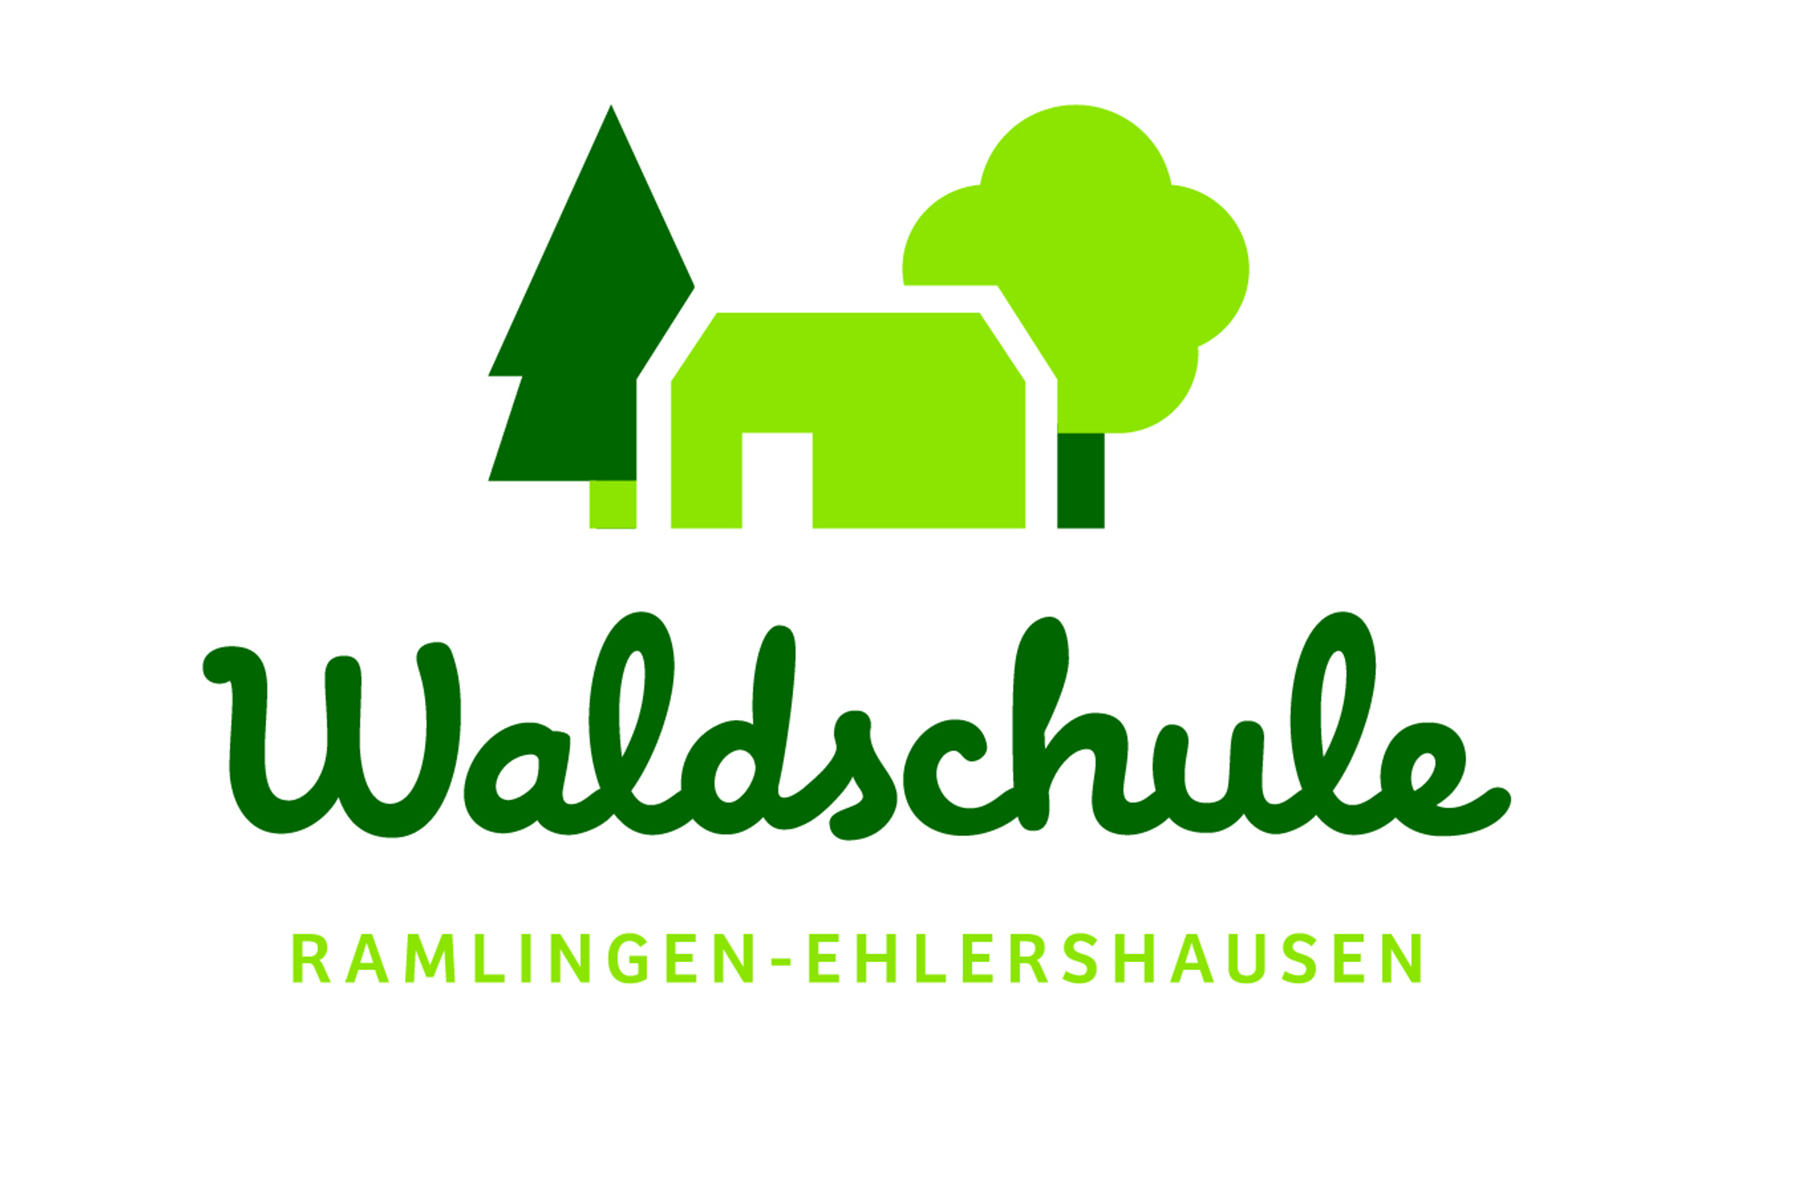 Waldschule Ramlingen- Ehlerhausen